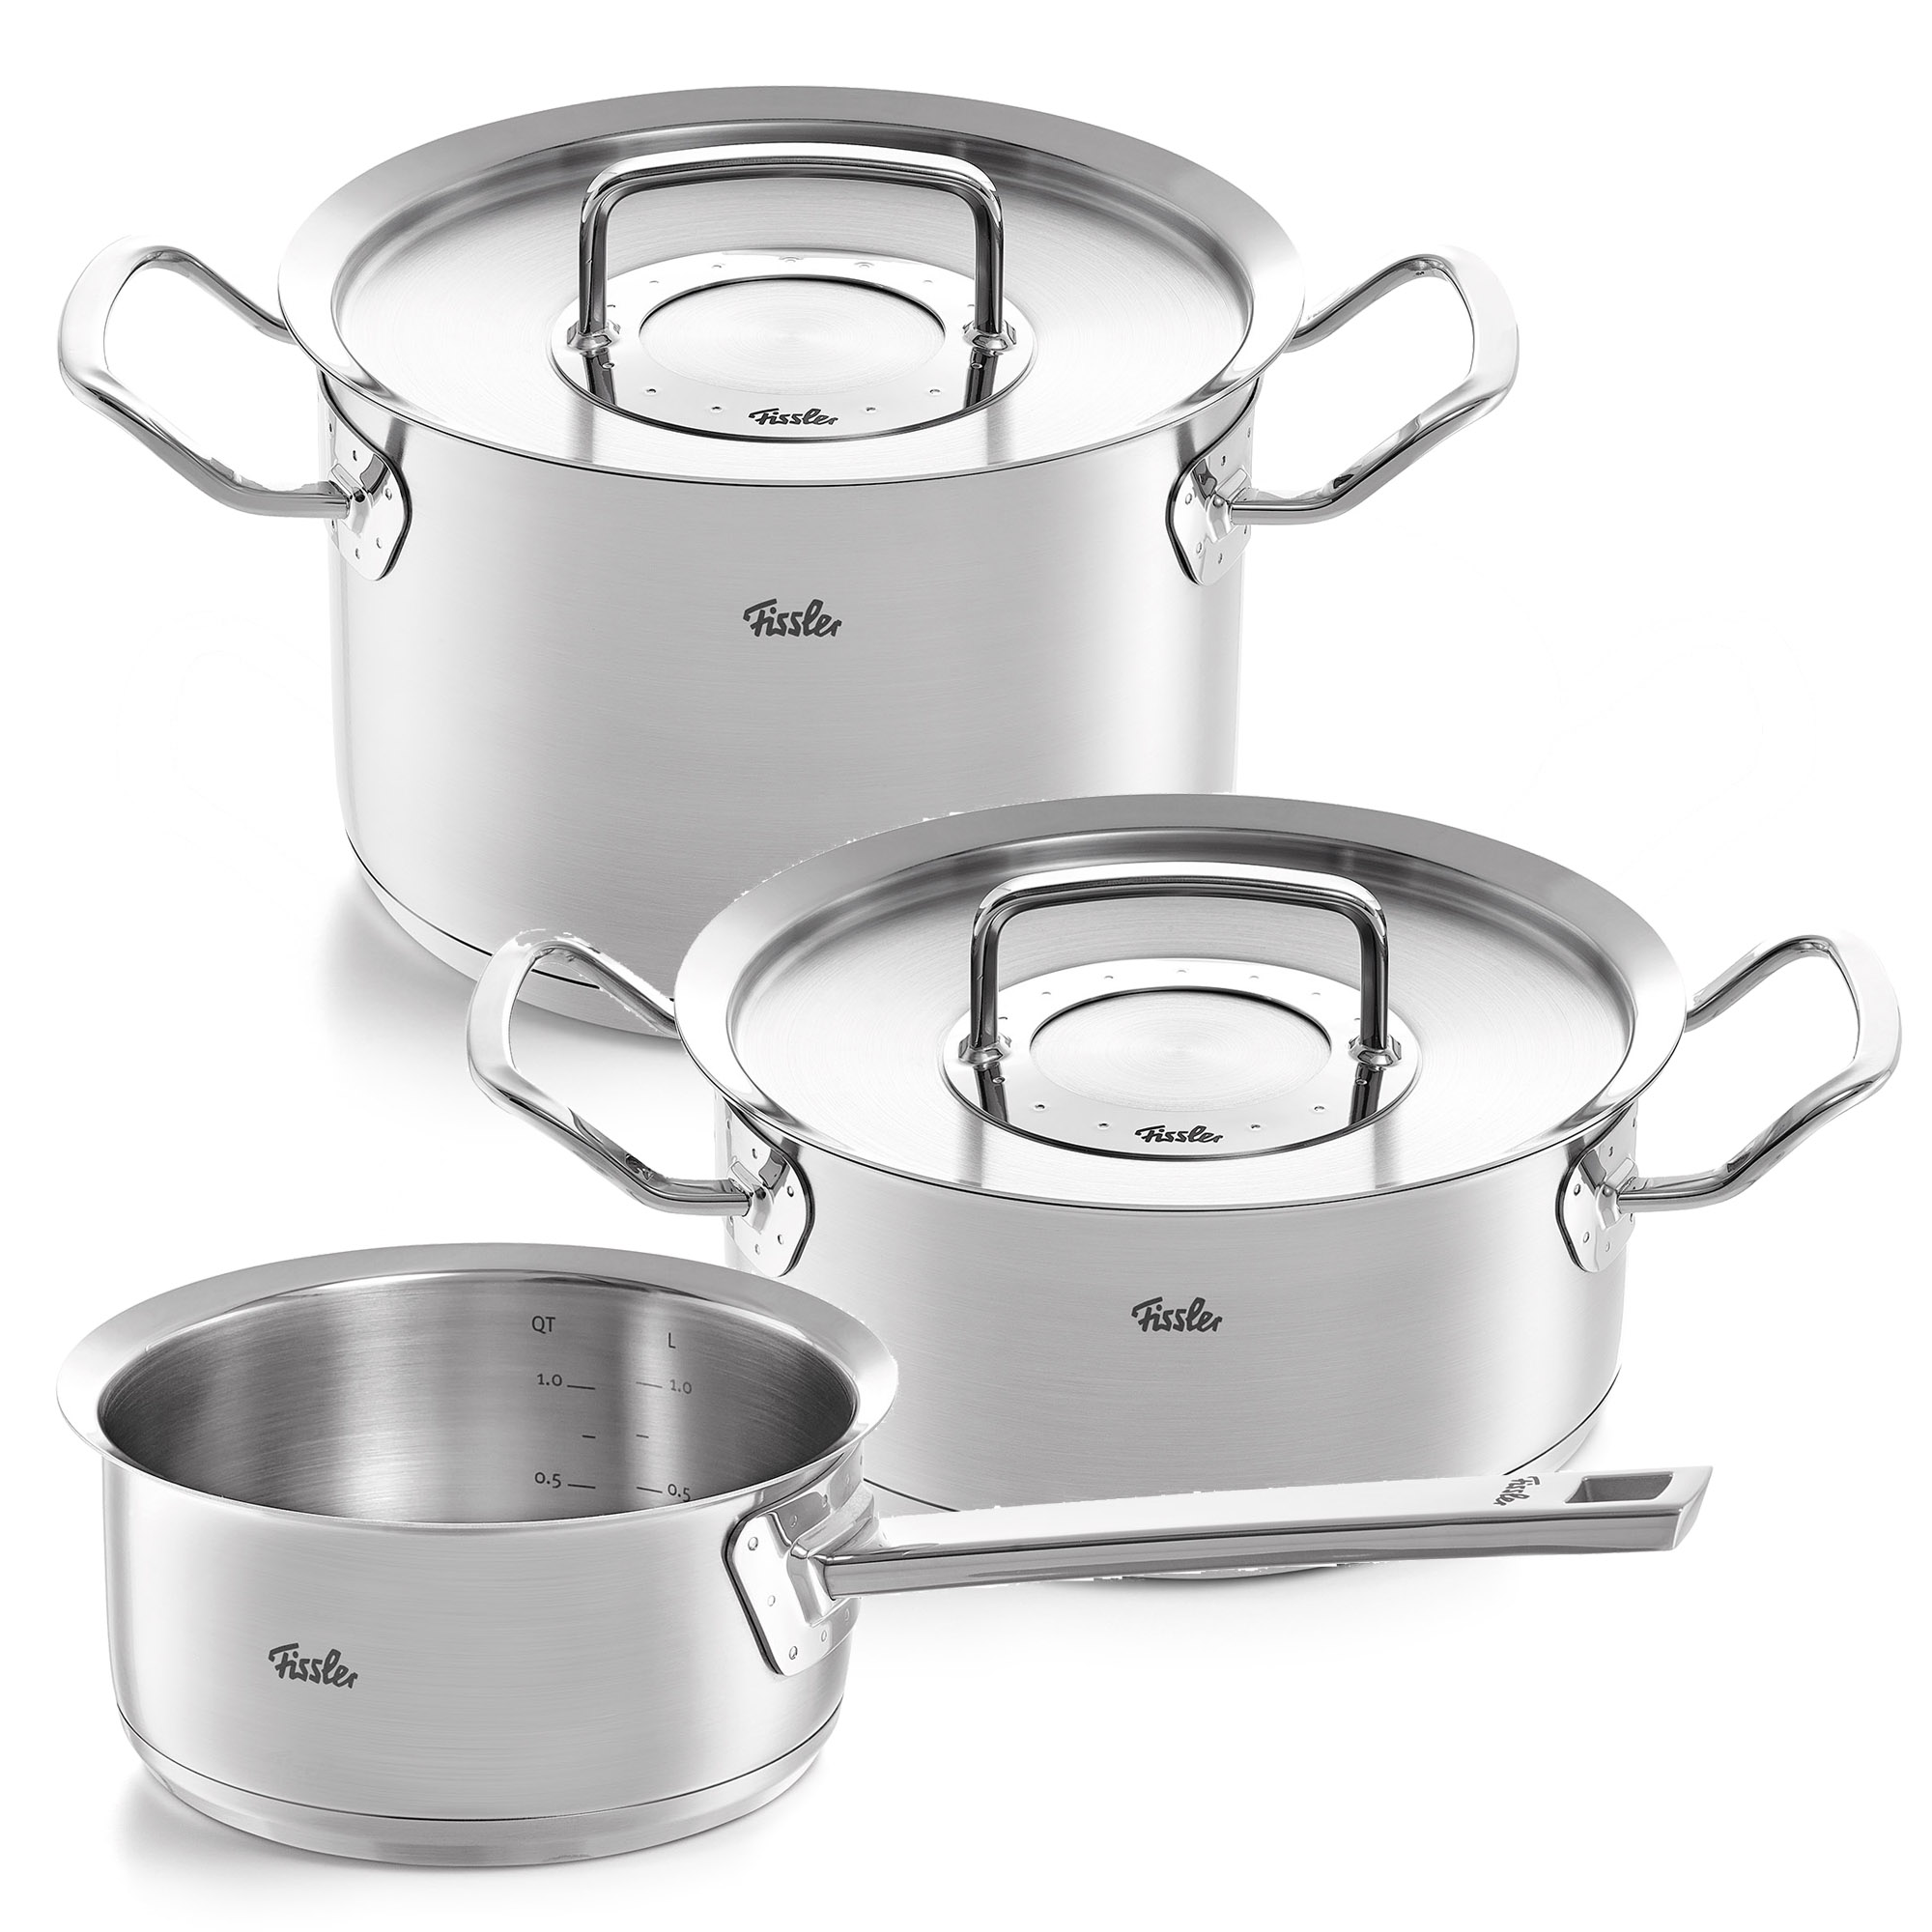 lid & Cookware | metal | Original set 1a-Neuware Profi sets cookware Englisch FISSLER COOKING Collection | | 3-piece BAKING Cooking with